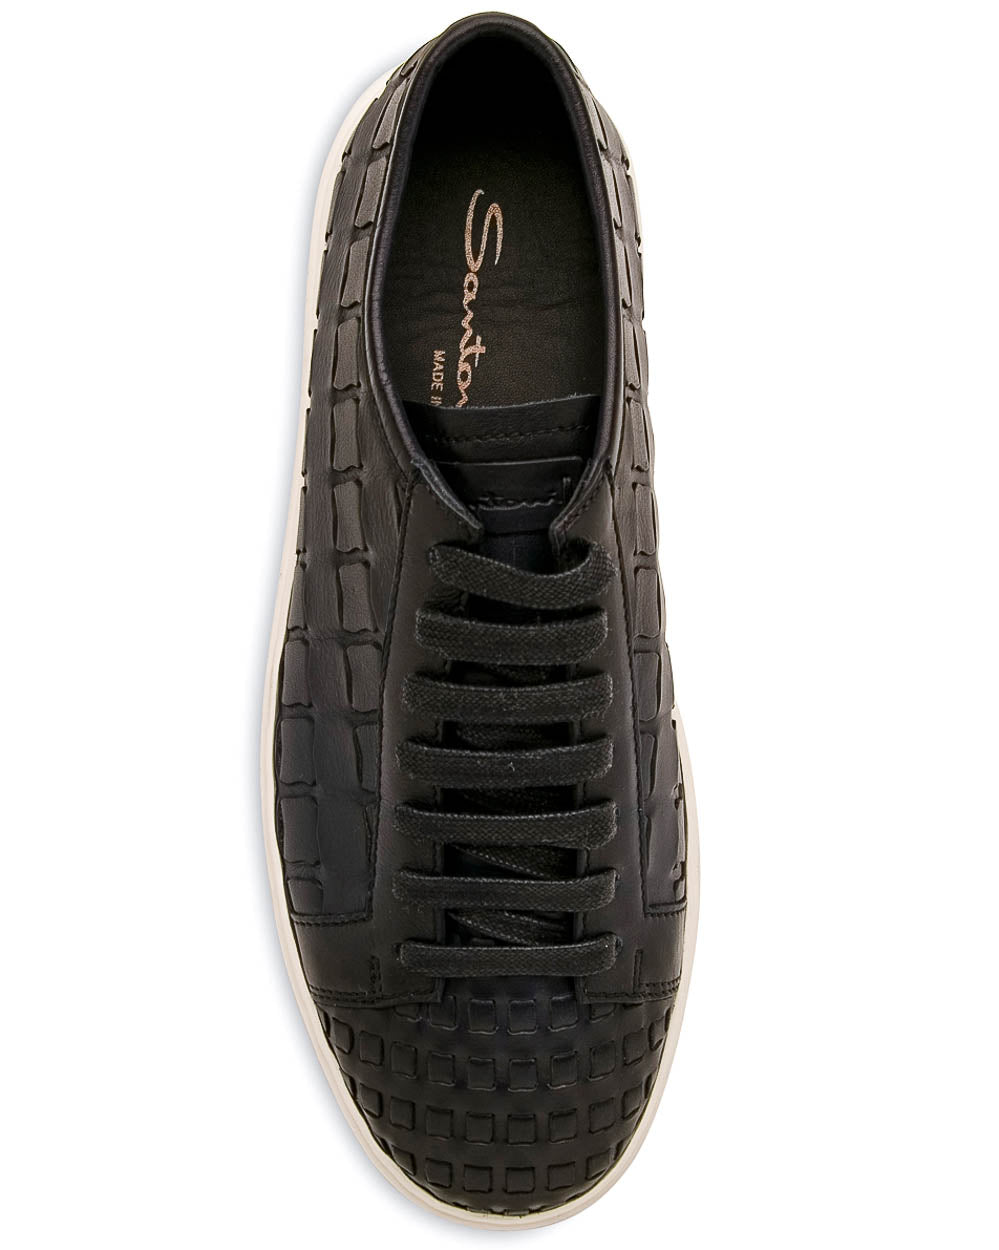 Byam Woven Leather Sneaker in Dark Navy